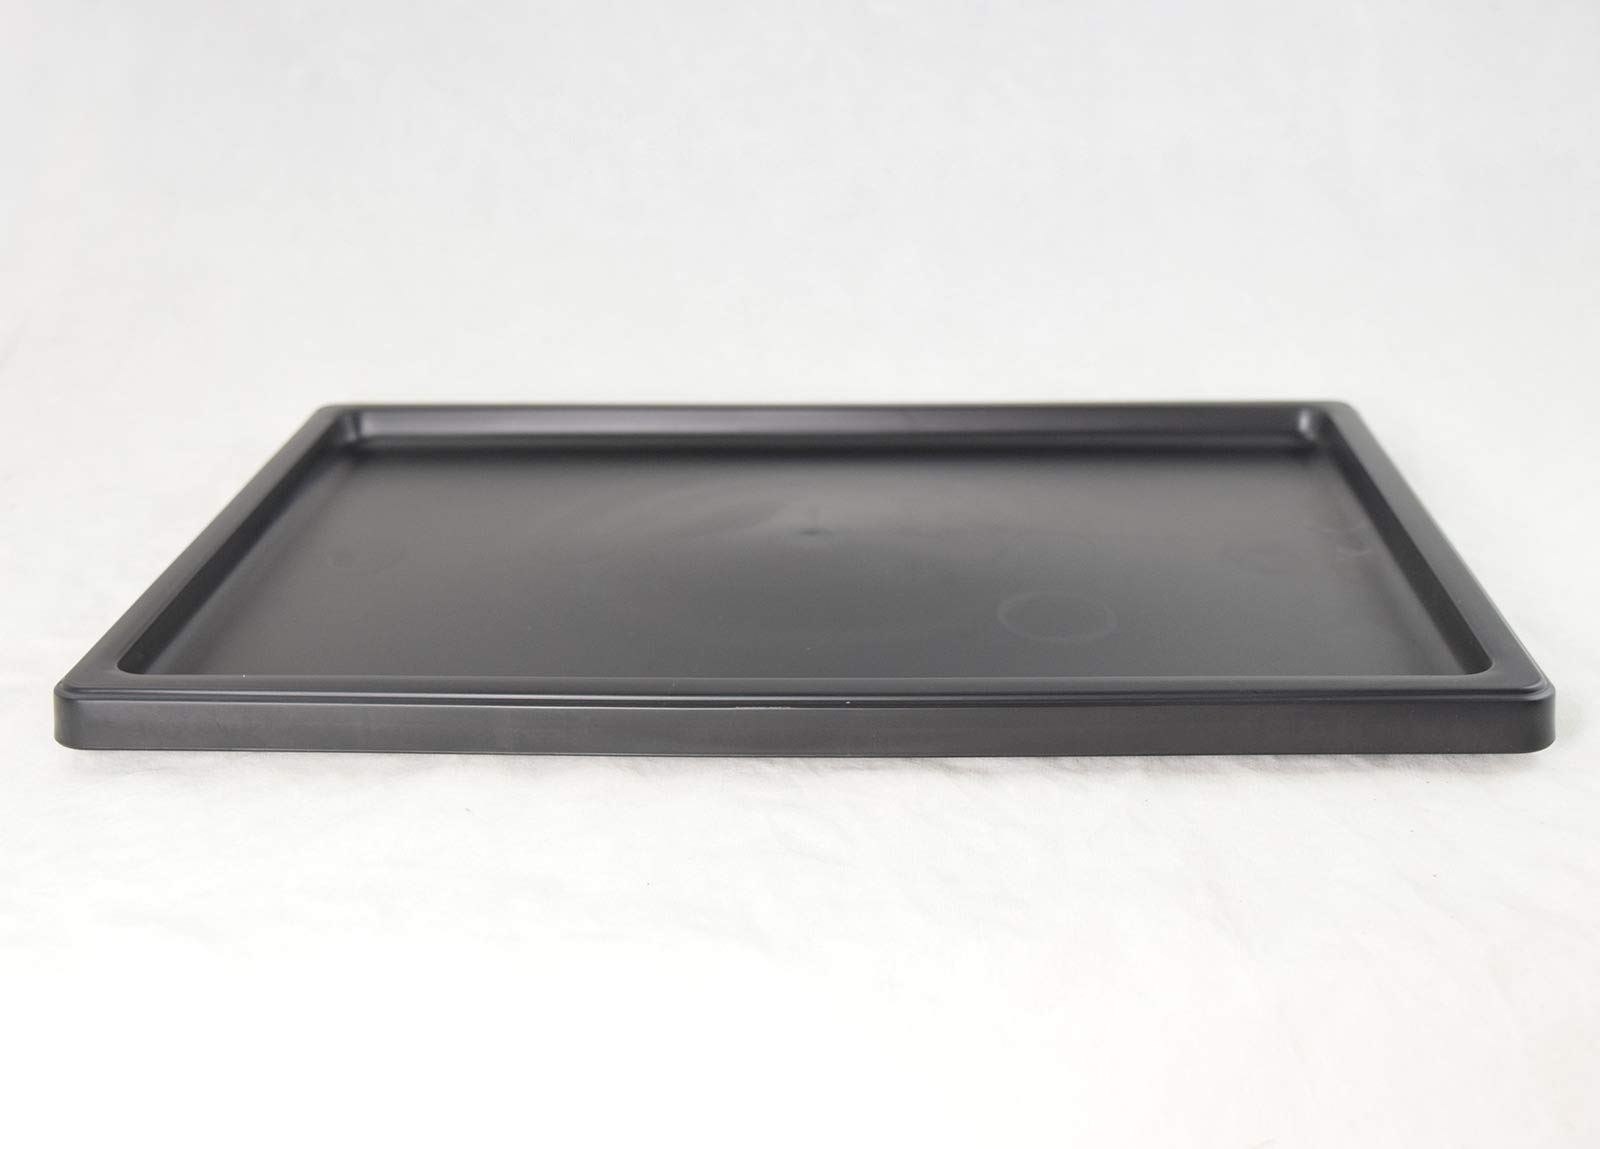 Japanese Black Plastic Humidity/Drip Tray for Bonsai Tree 10.75"x 7.75"x 0.75"